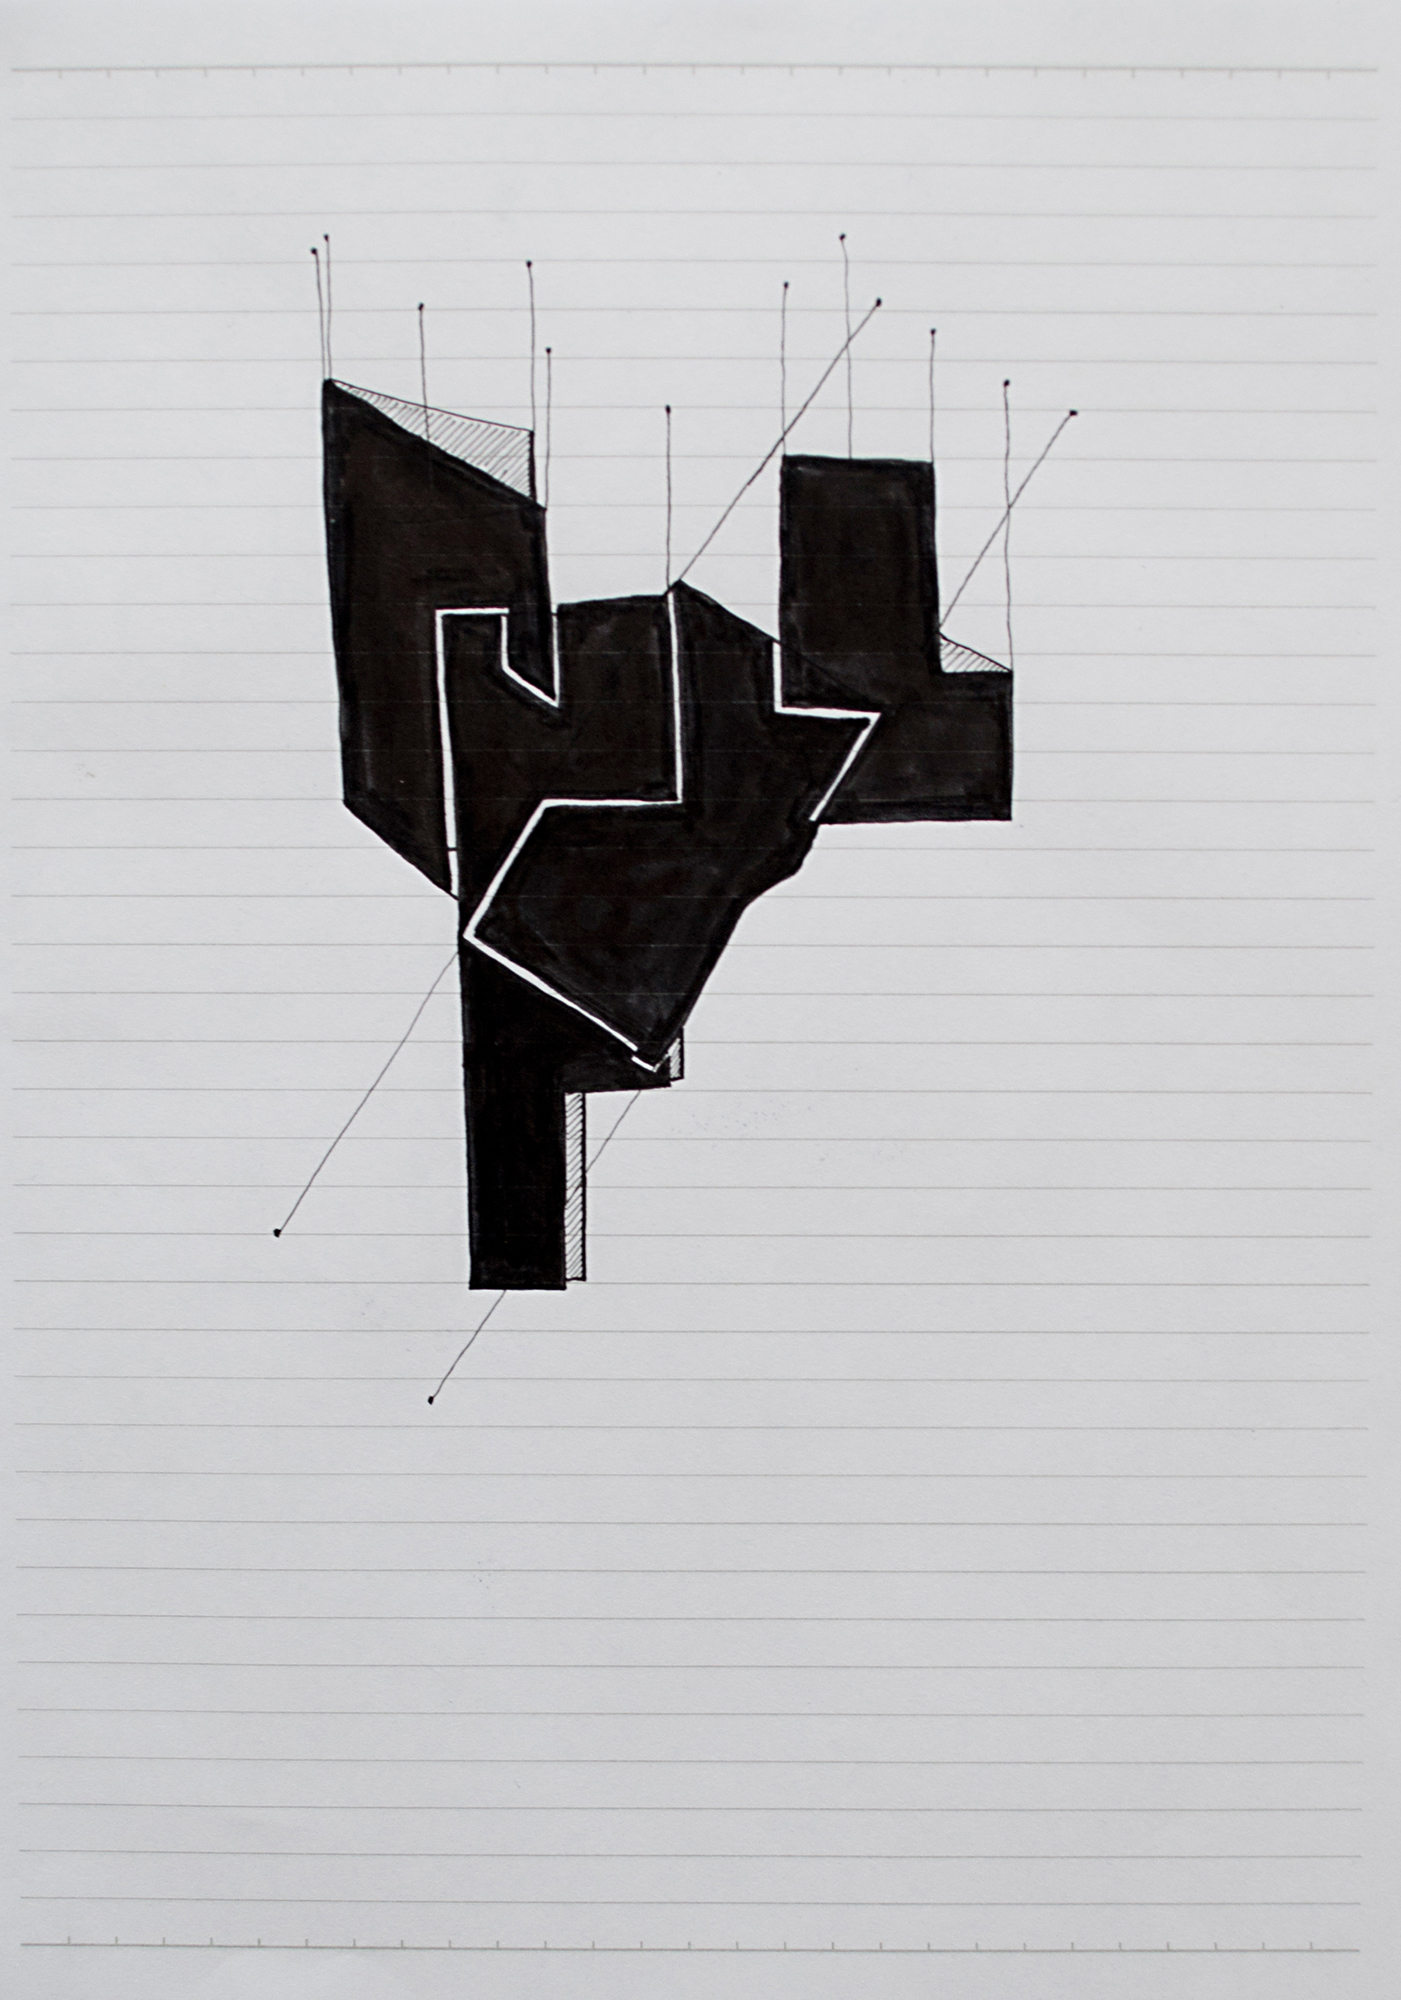 Untitled (Hanging Shapes), 2014